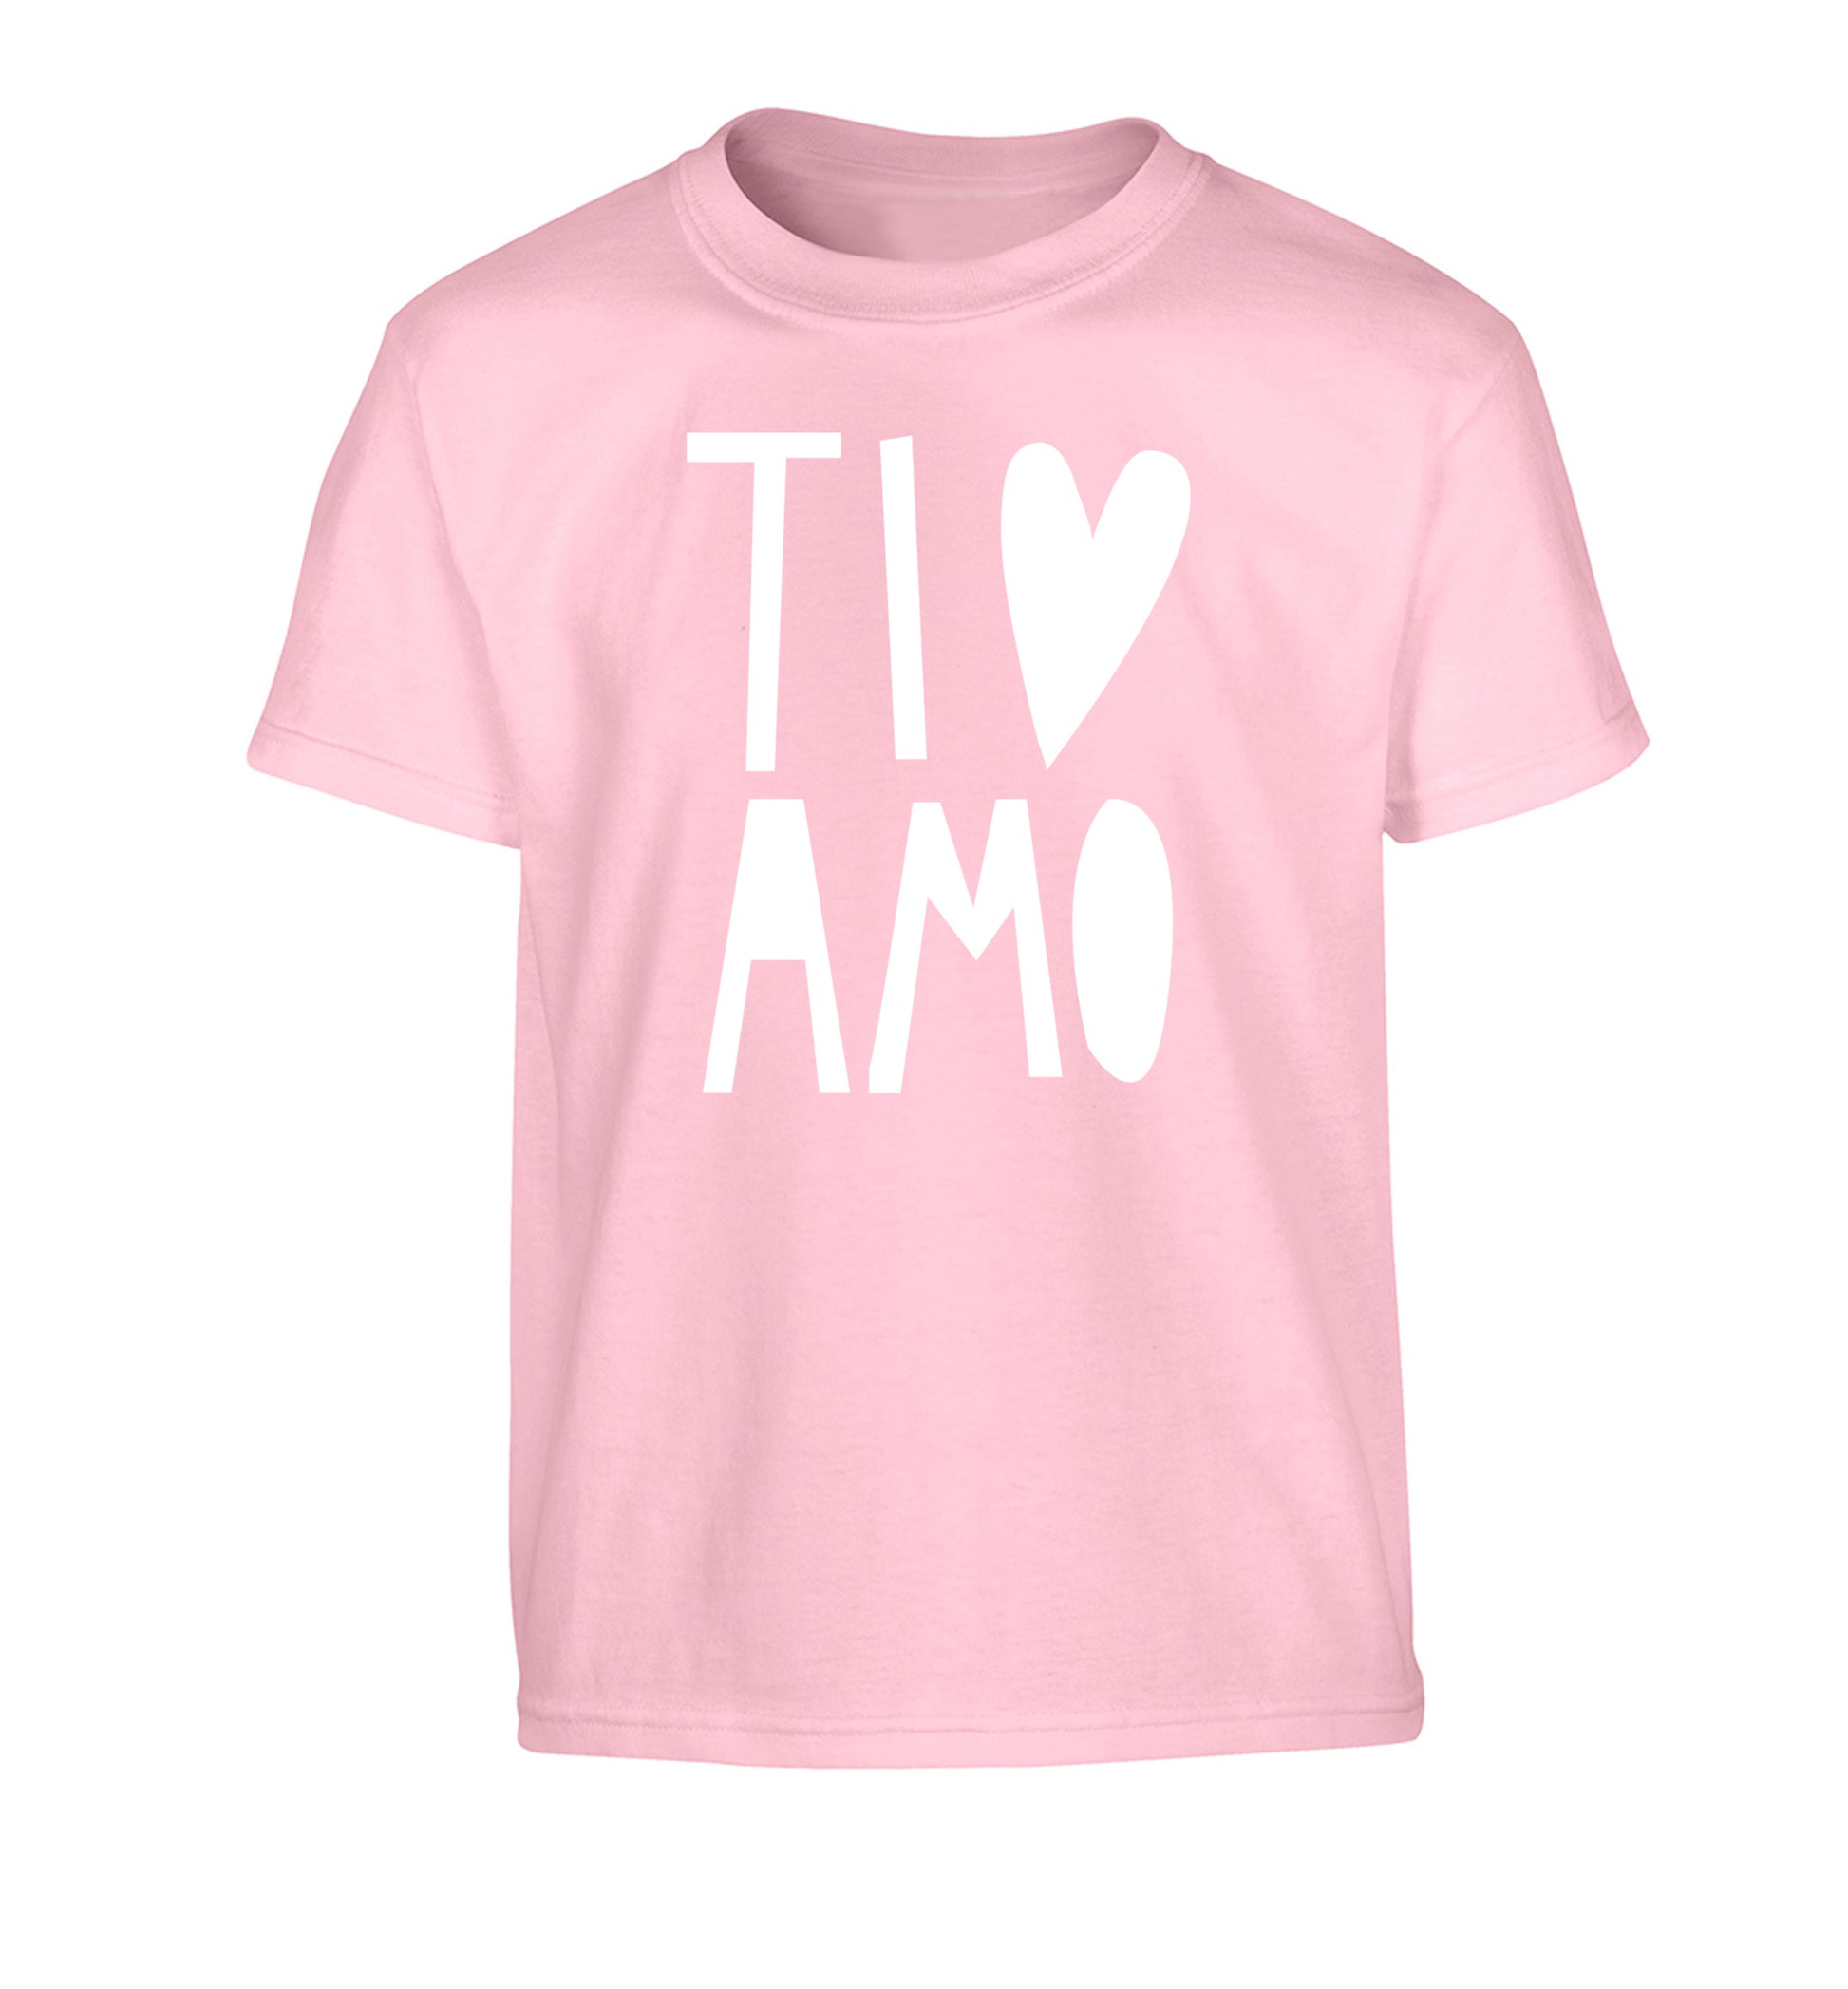 Ti amo - I love you Children's light pink Tshirt 12-13 Years